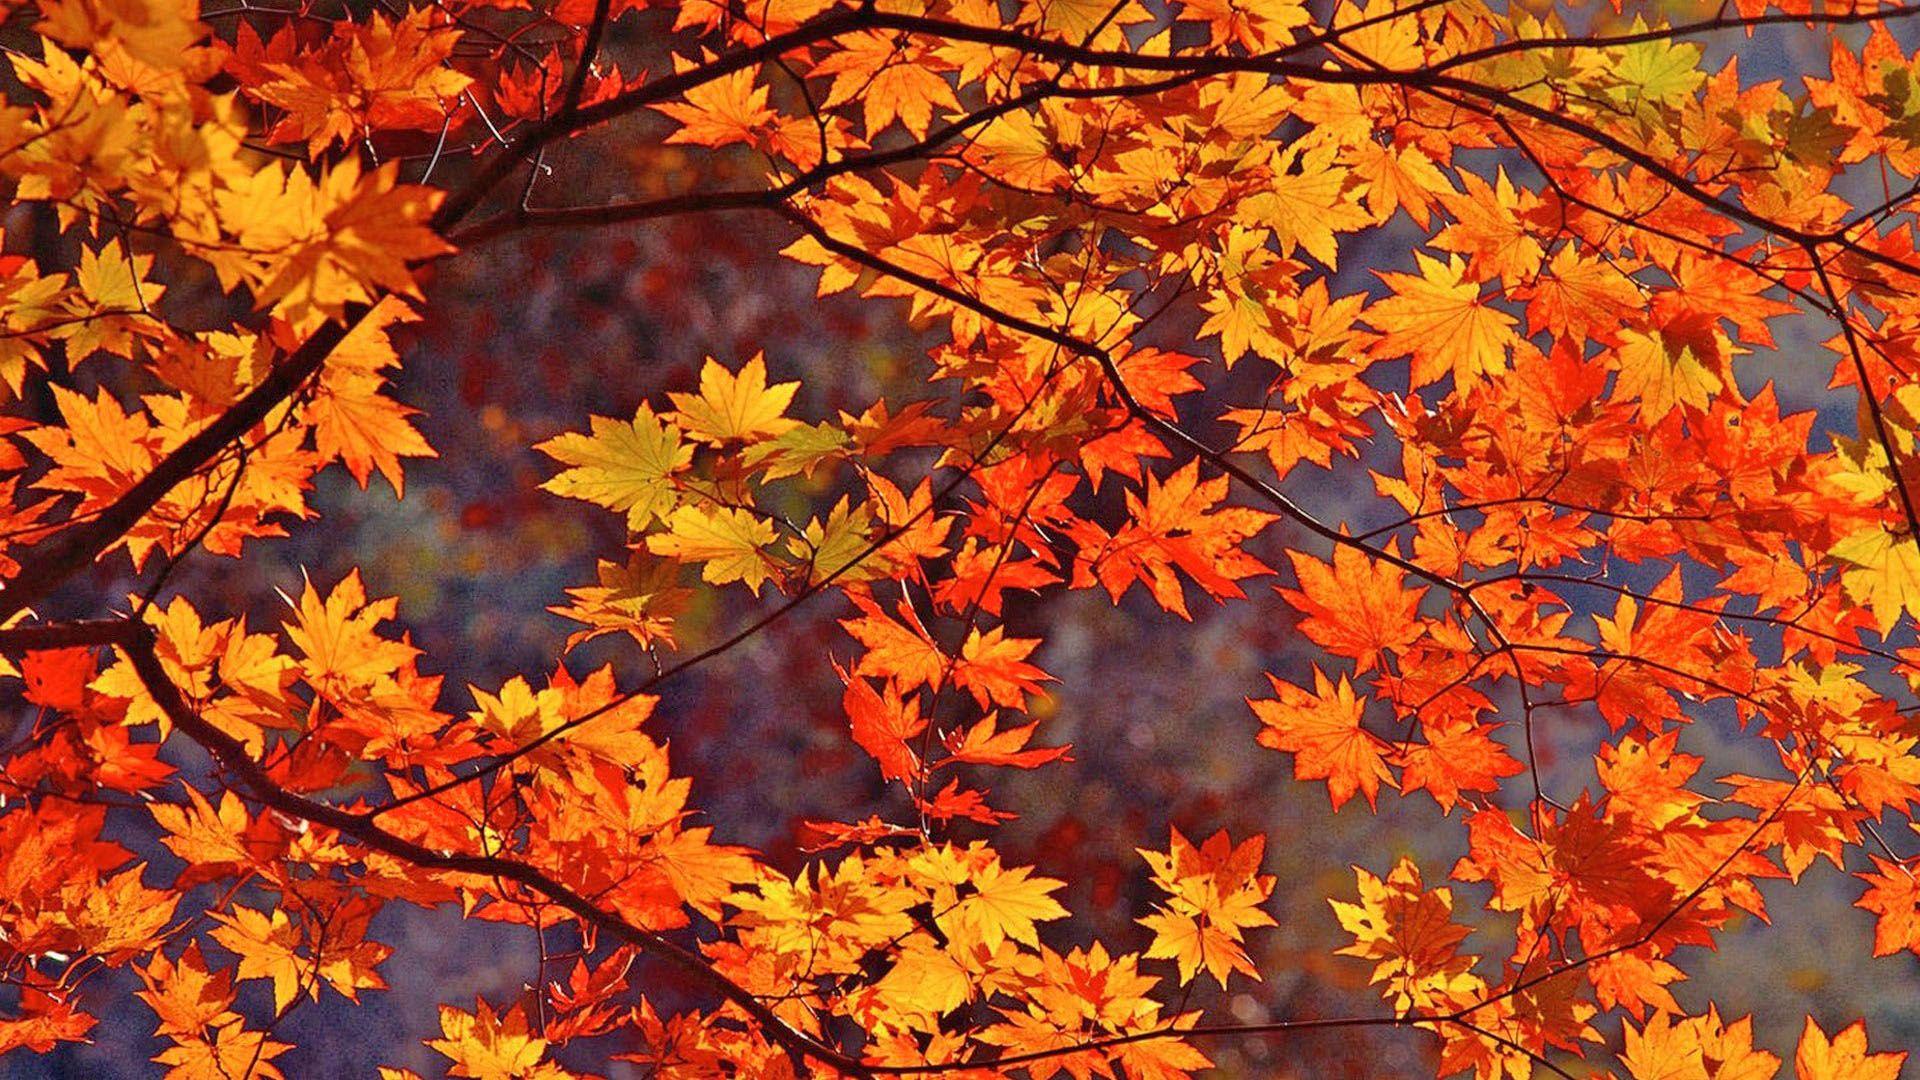 Reasons To Love Fall. Free fall wallpaper, Autumn leaves wallpaper, Fall wallpaper